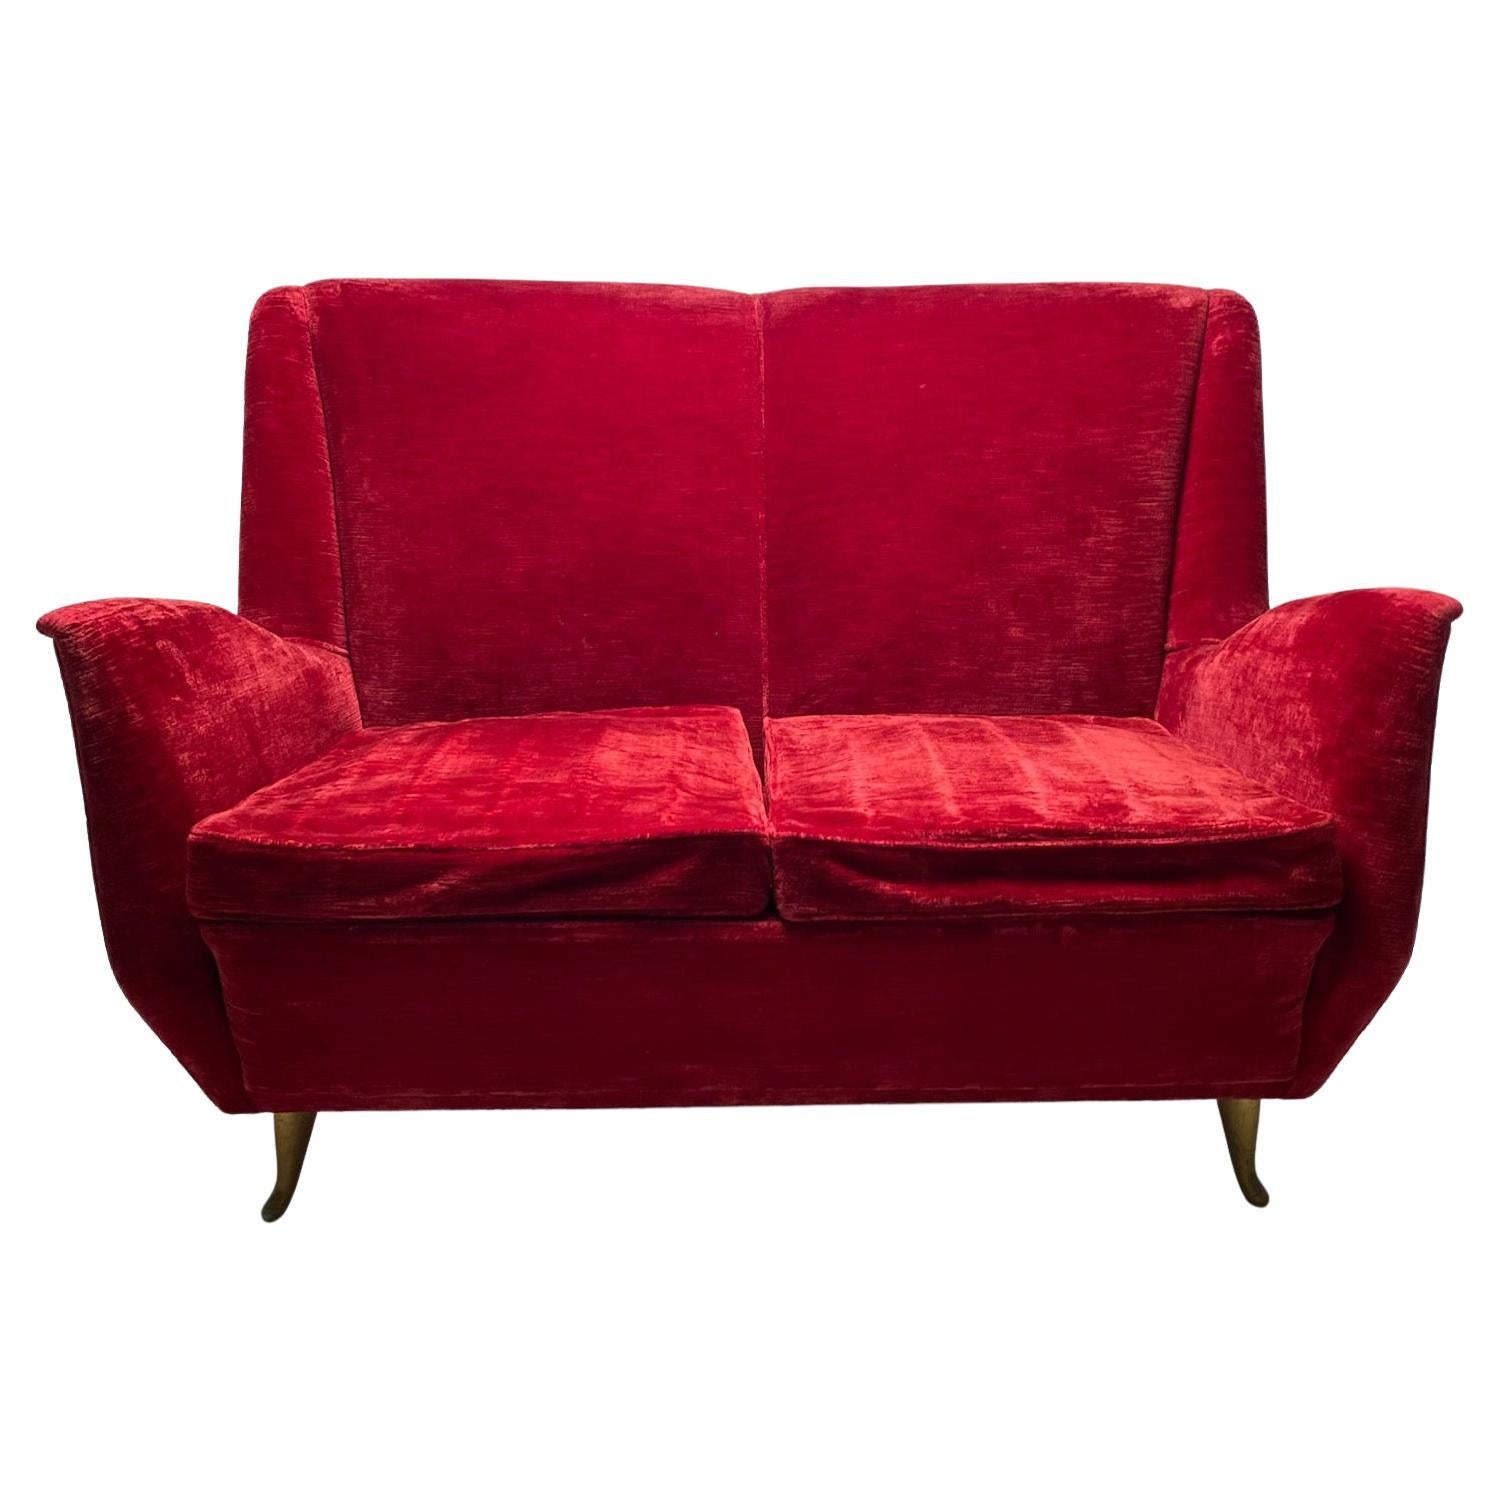 Italian Two-Seater Red Sofa, Produced by I.S.A. Bergamo, Att. Gio Ponti, 1950s For Sale